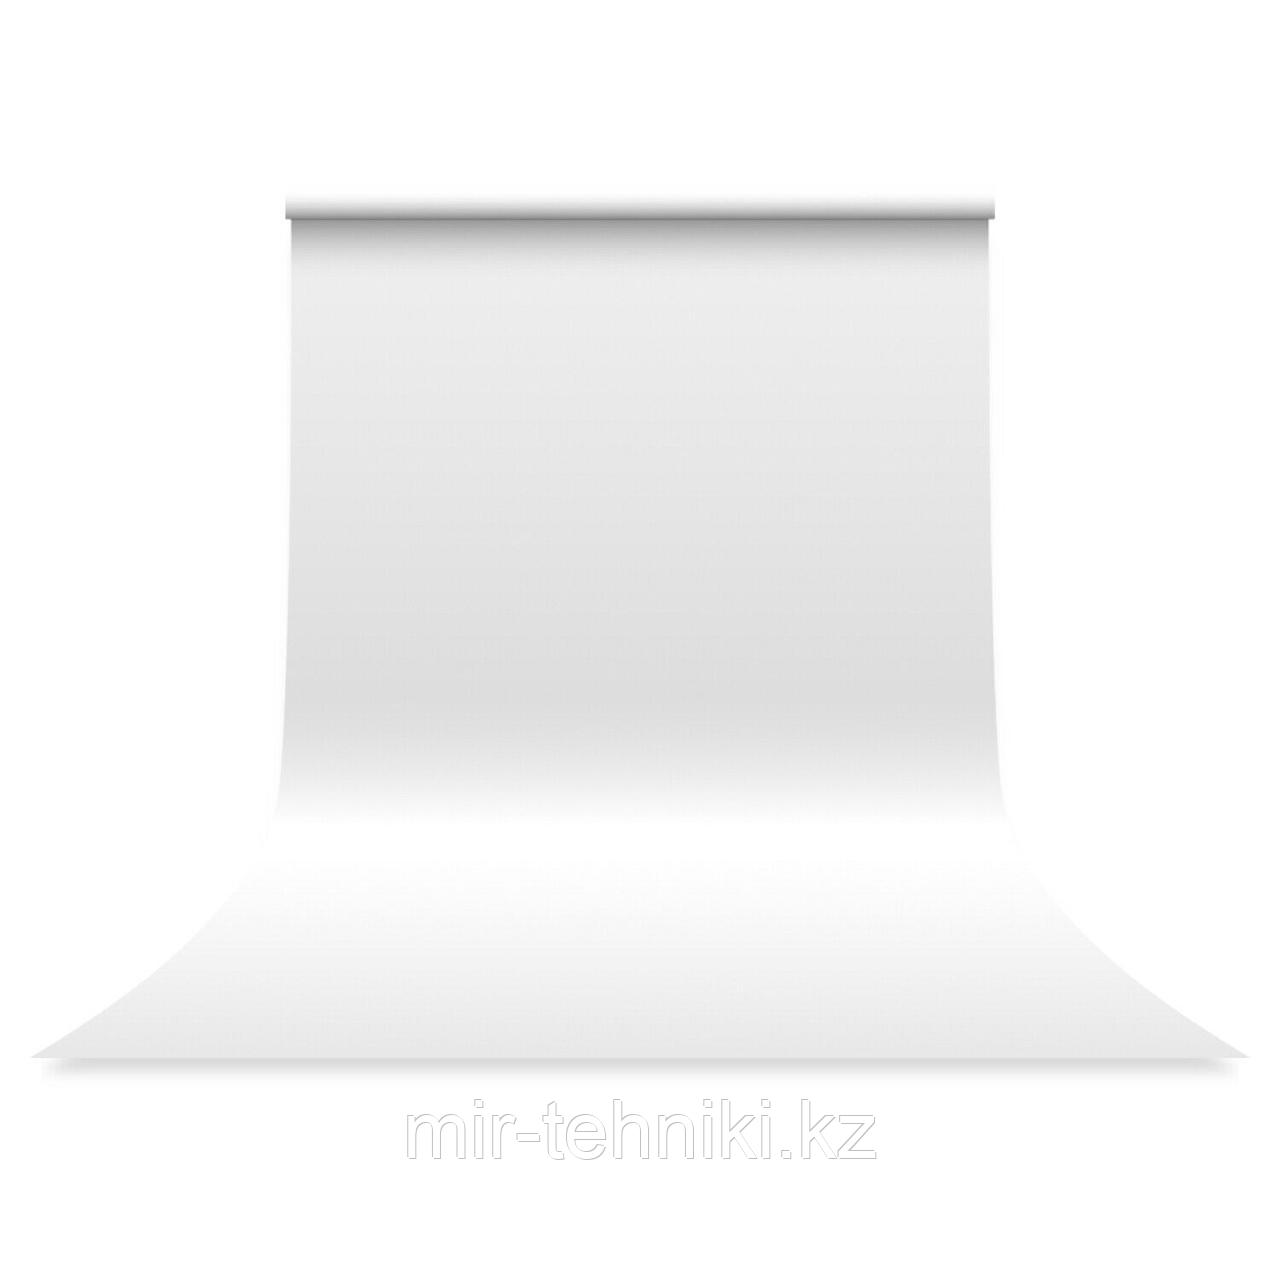 Белый фон тканевый хромакей E-Image MB36 3м х 6 м  Муслин 120G